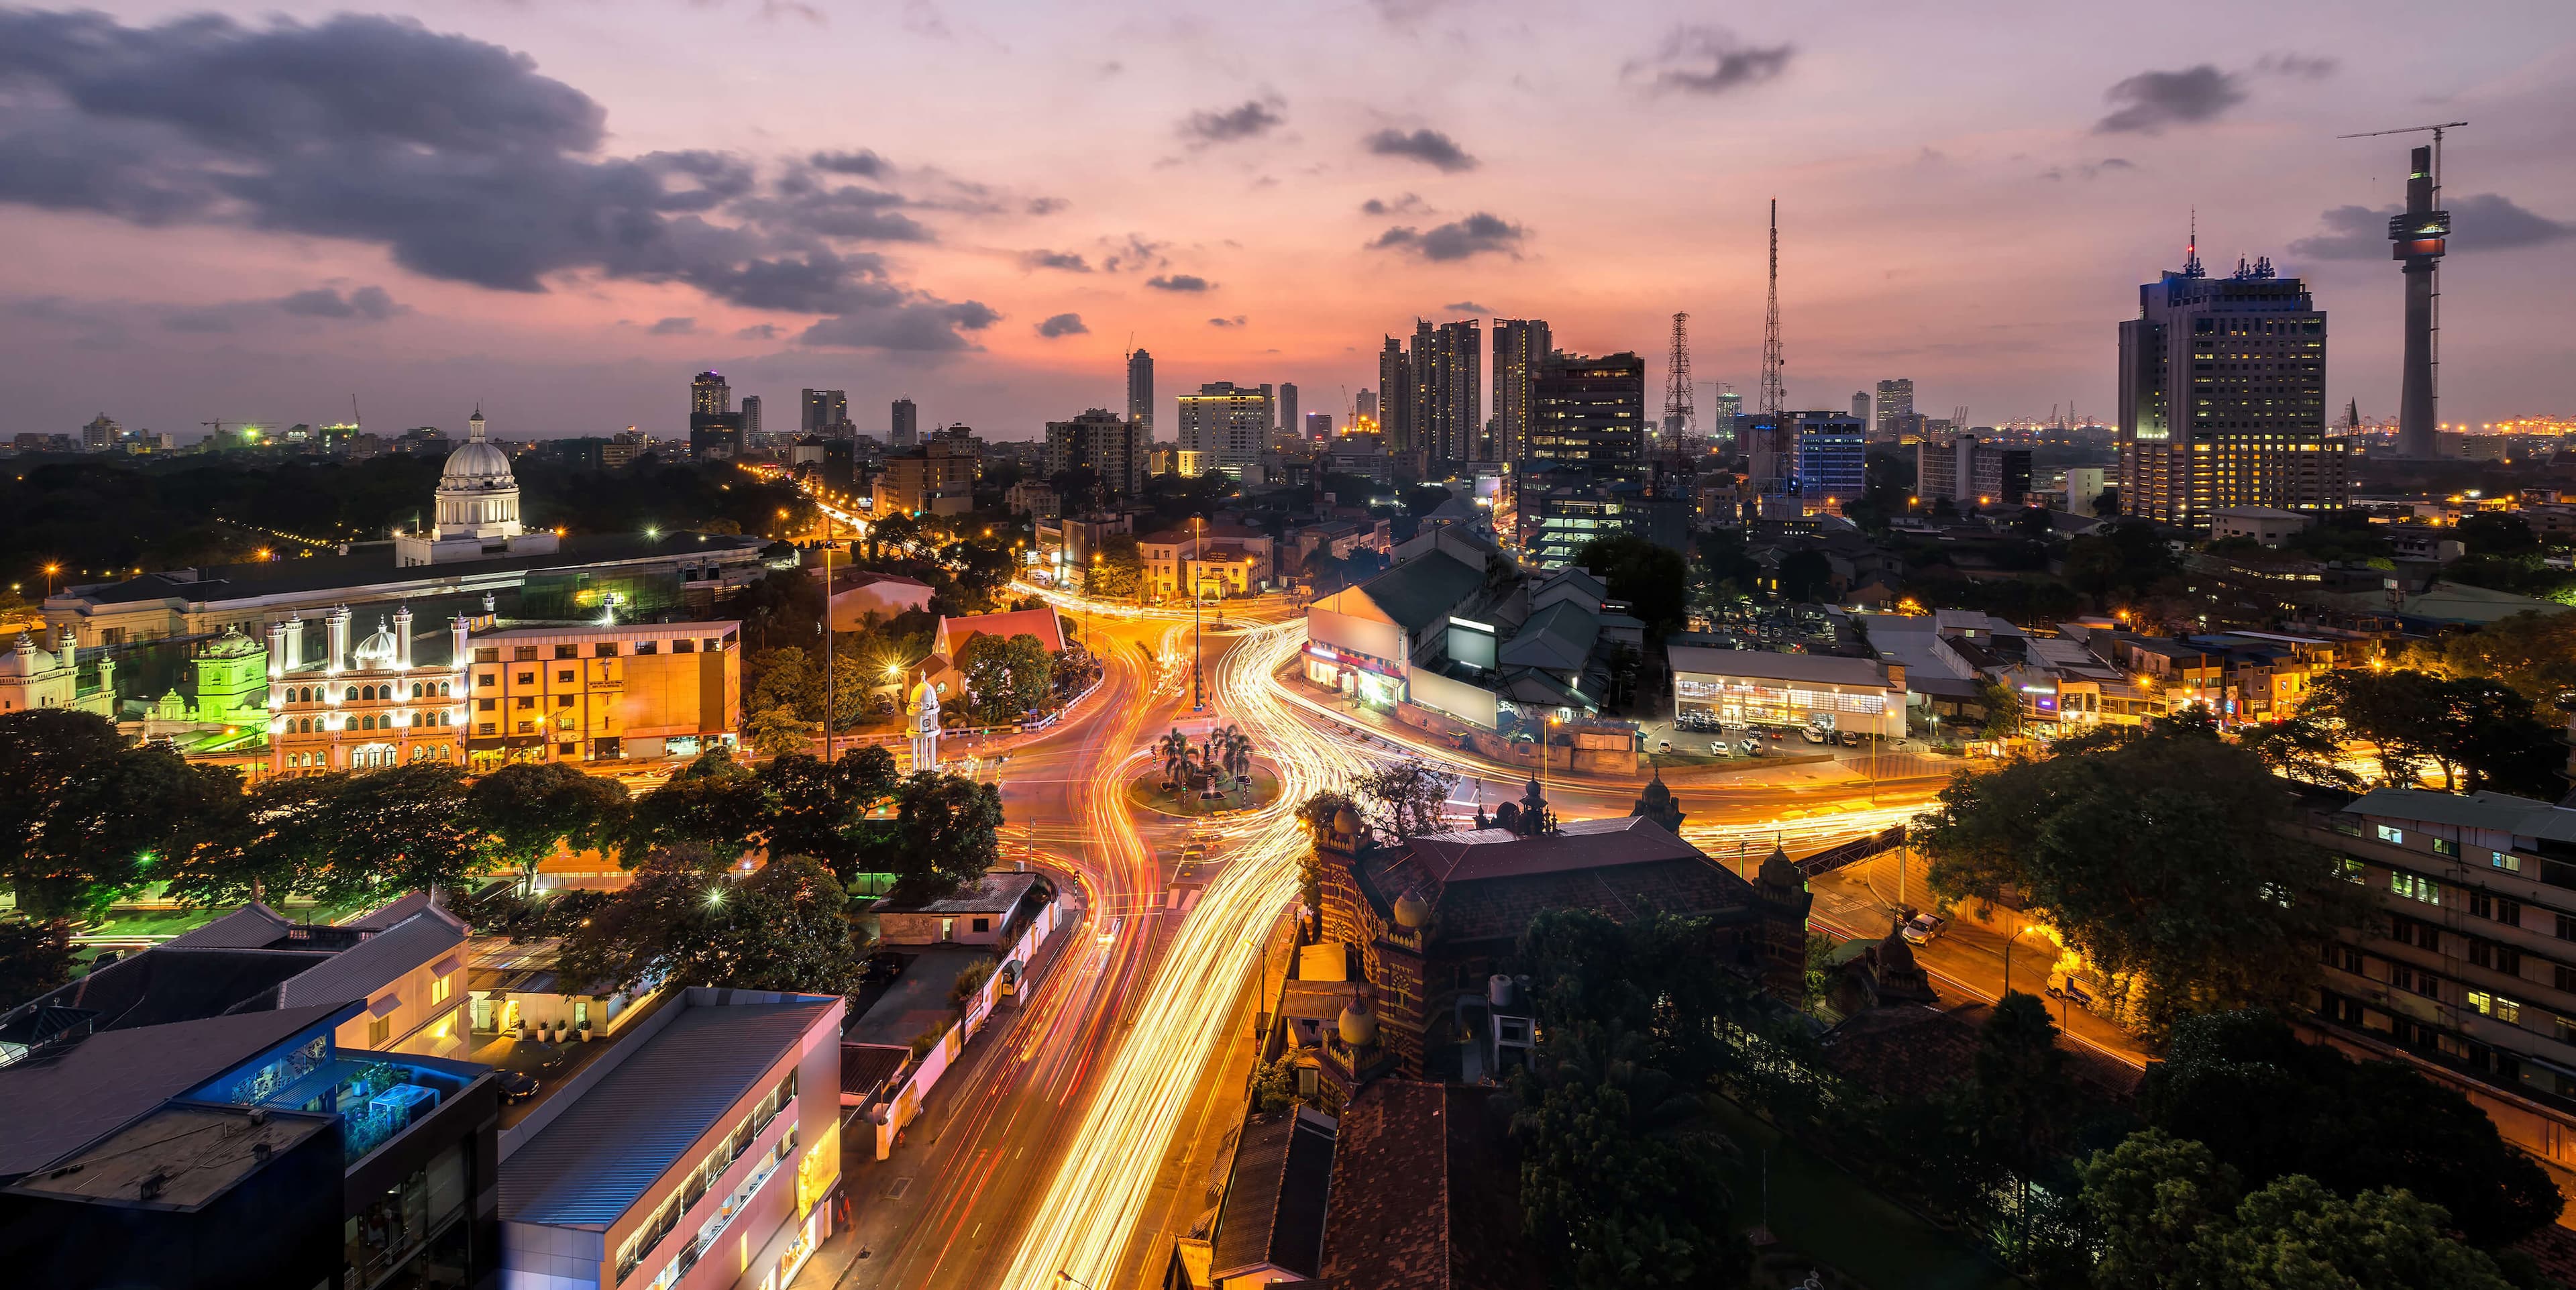 Night time view of the Colombo city, Sri Lanka.